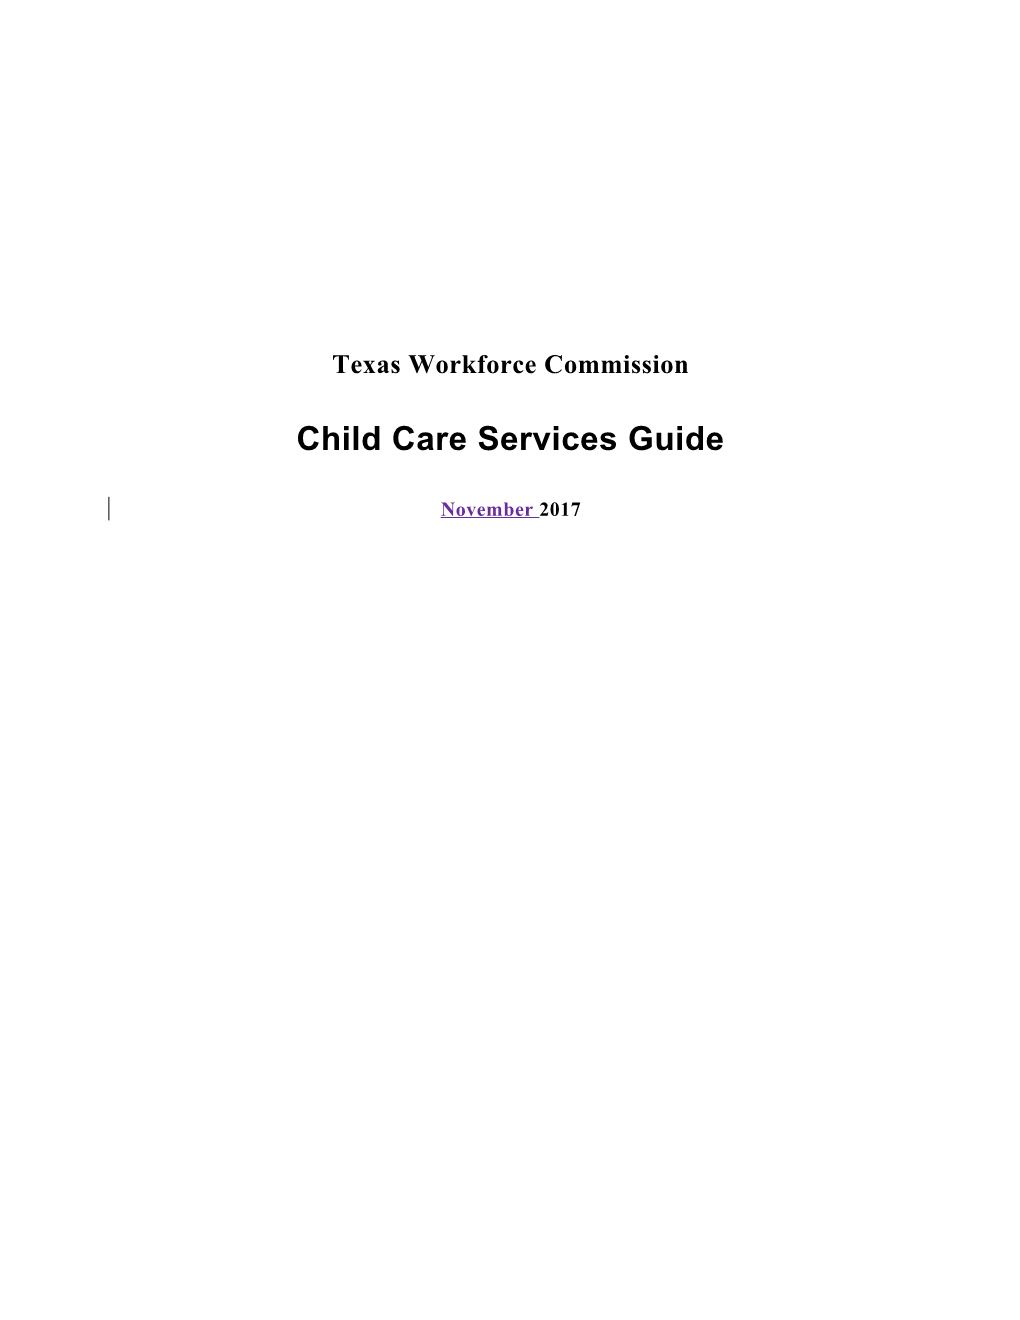 Child Care Services Guide